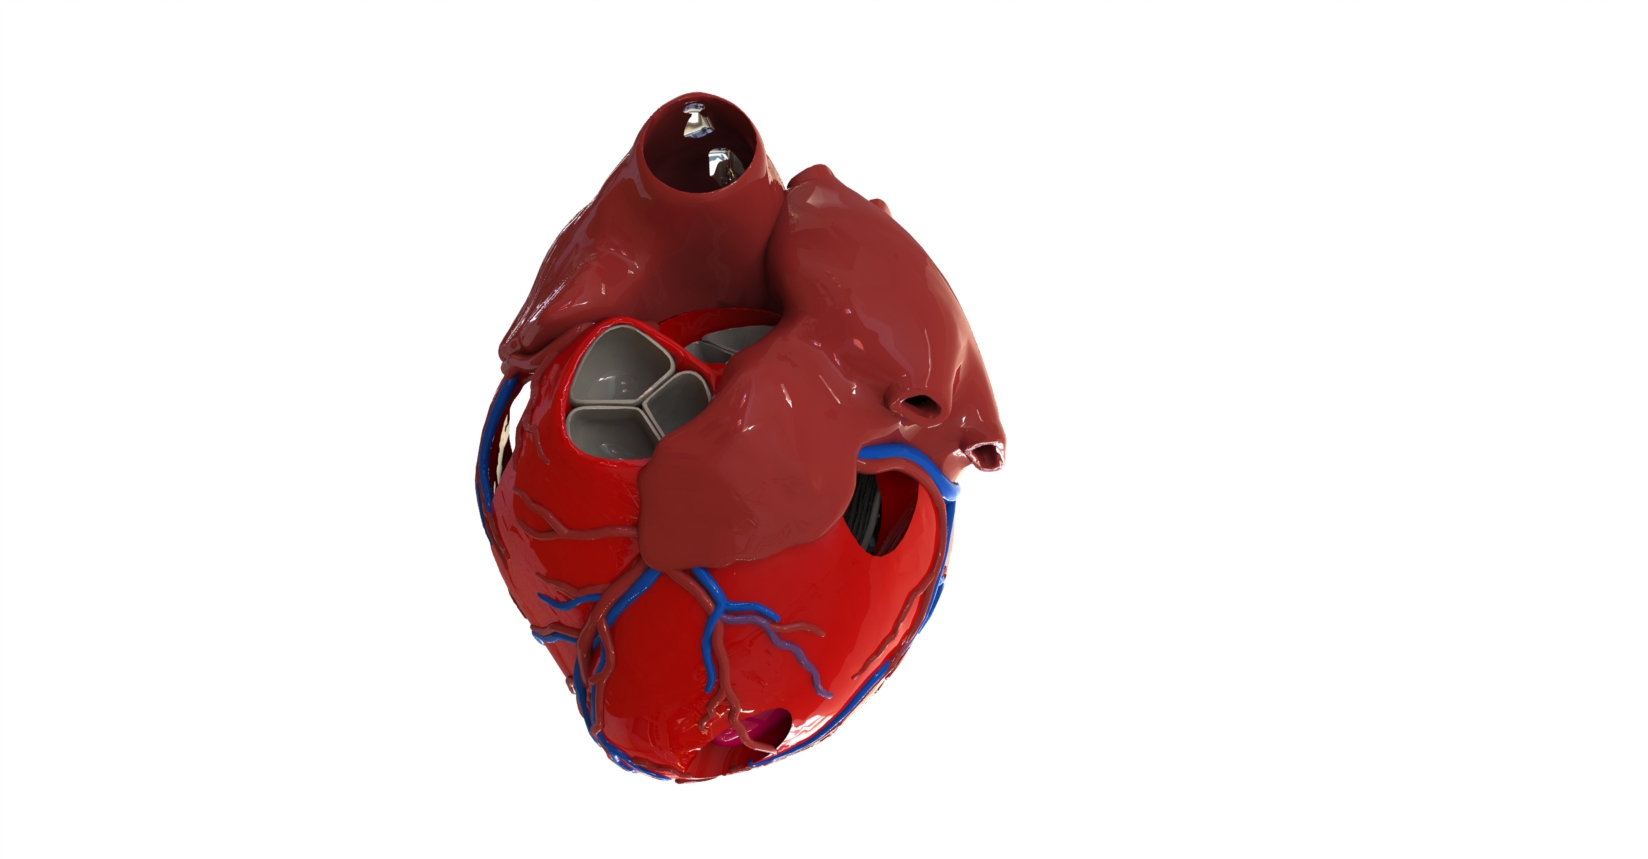 A 3D printed anatomical heart model. Photo via AdventHealth Nicholson Center.